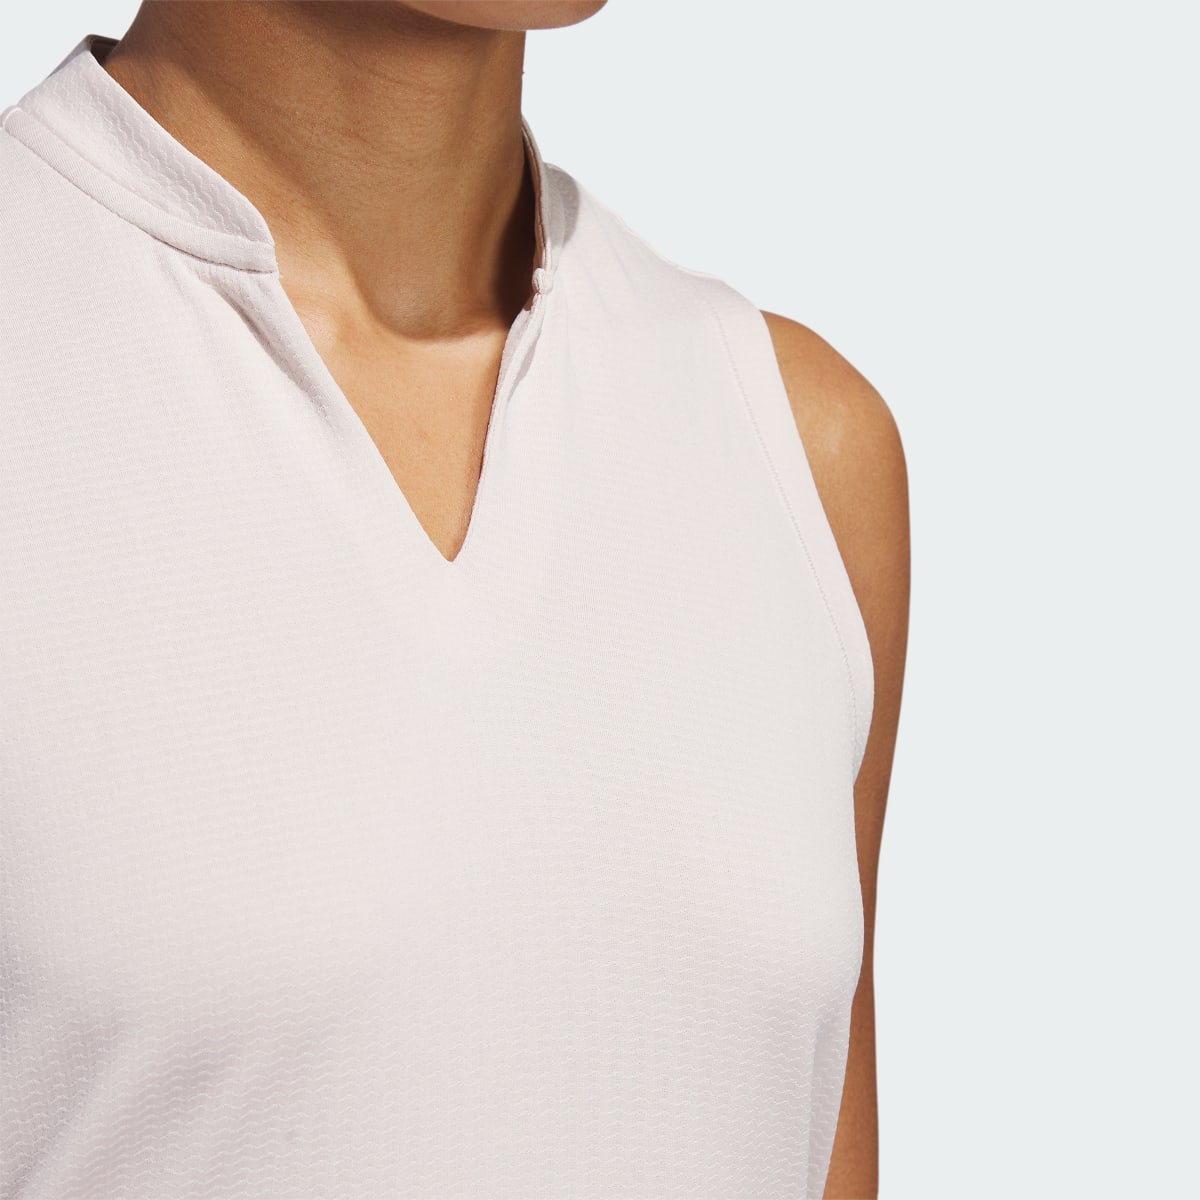 Adidas Ultimate365 Textured Sleeveless Polo Shirt. 6